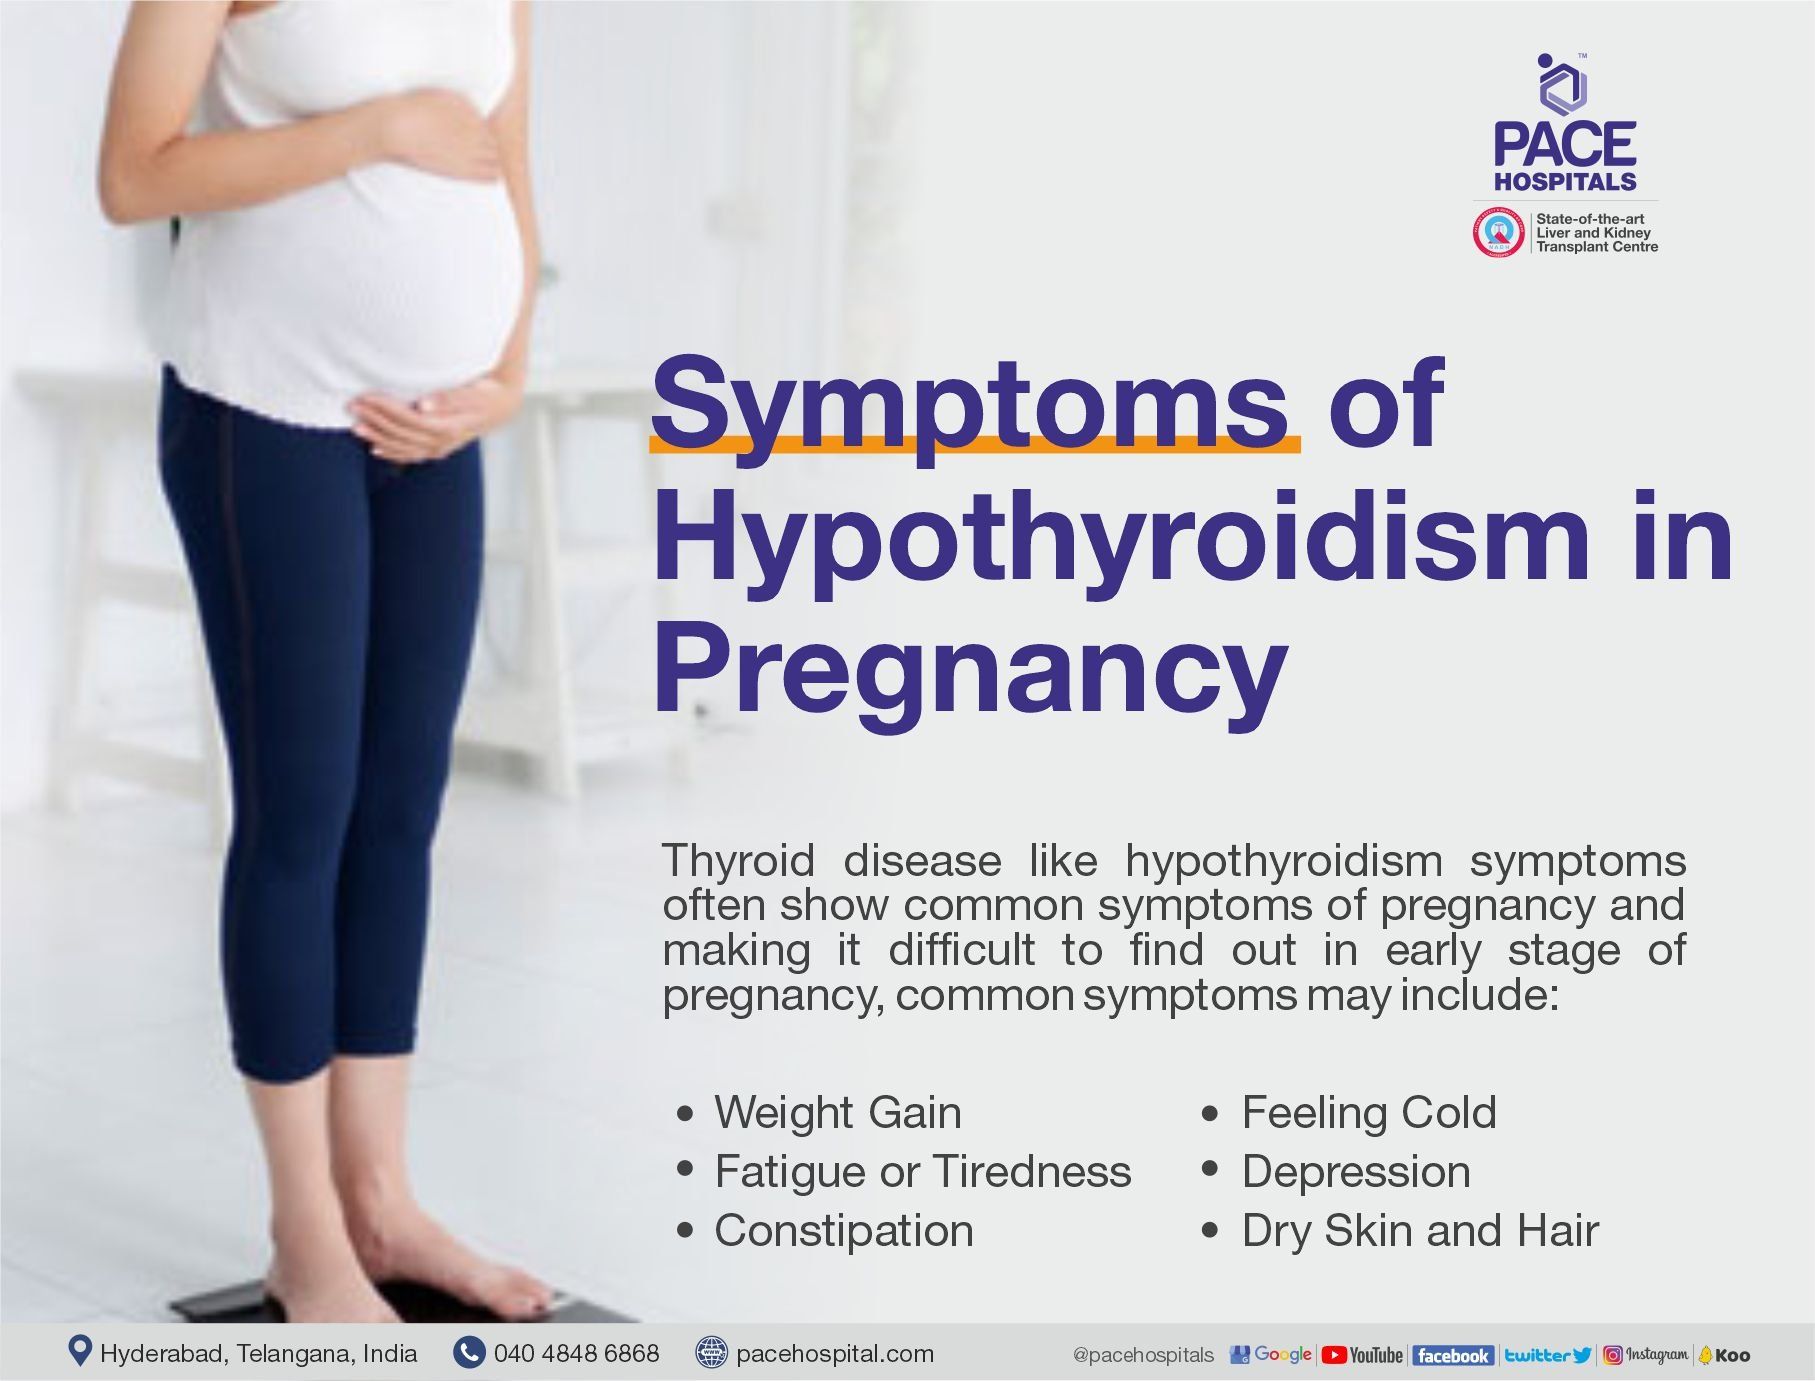 presentation of hypothyroidism during pregnancy